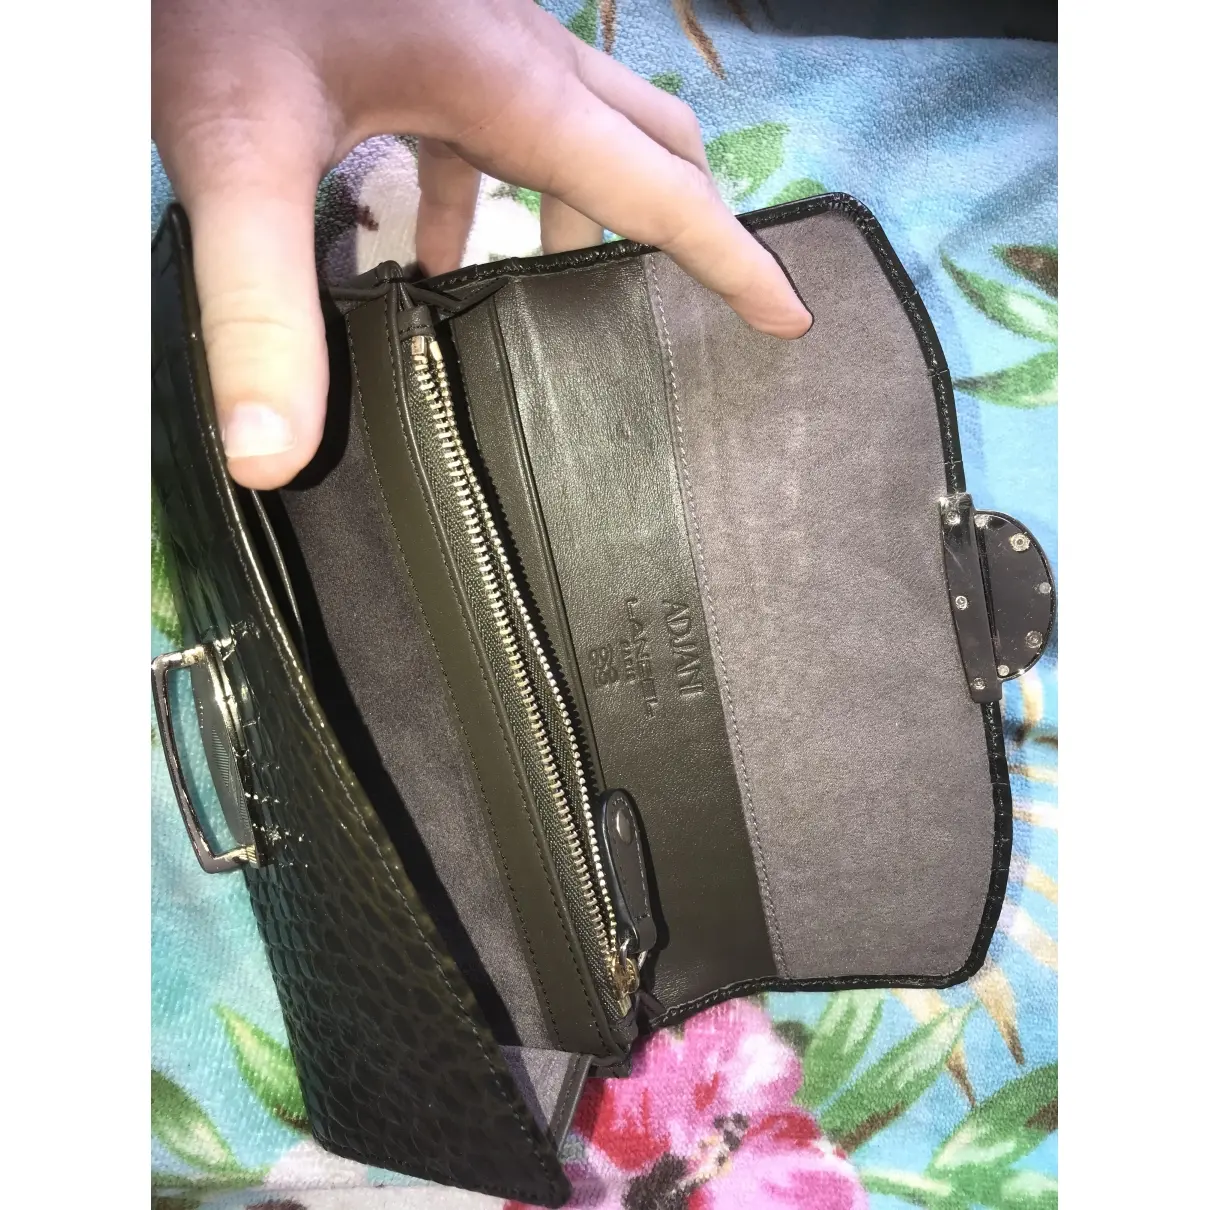 Buy Lancel Adjani leather wallet online